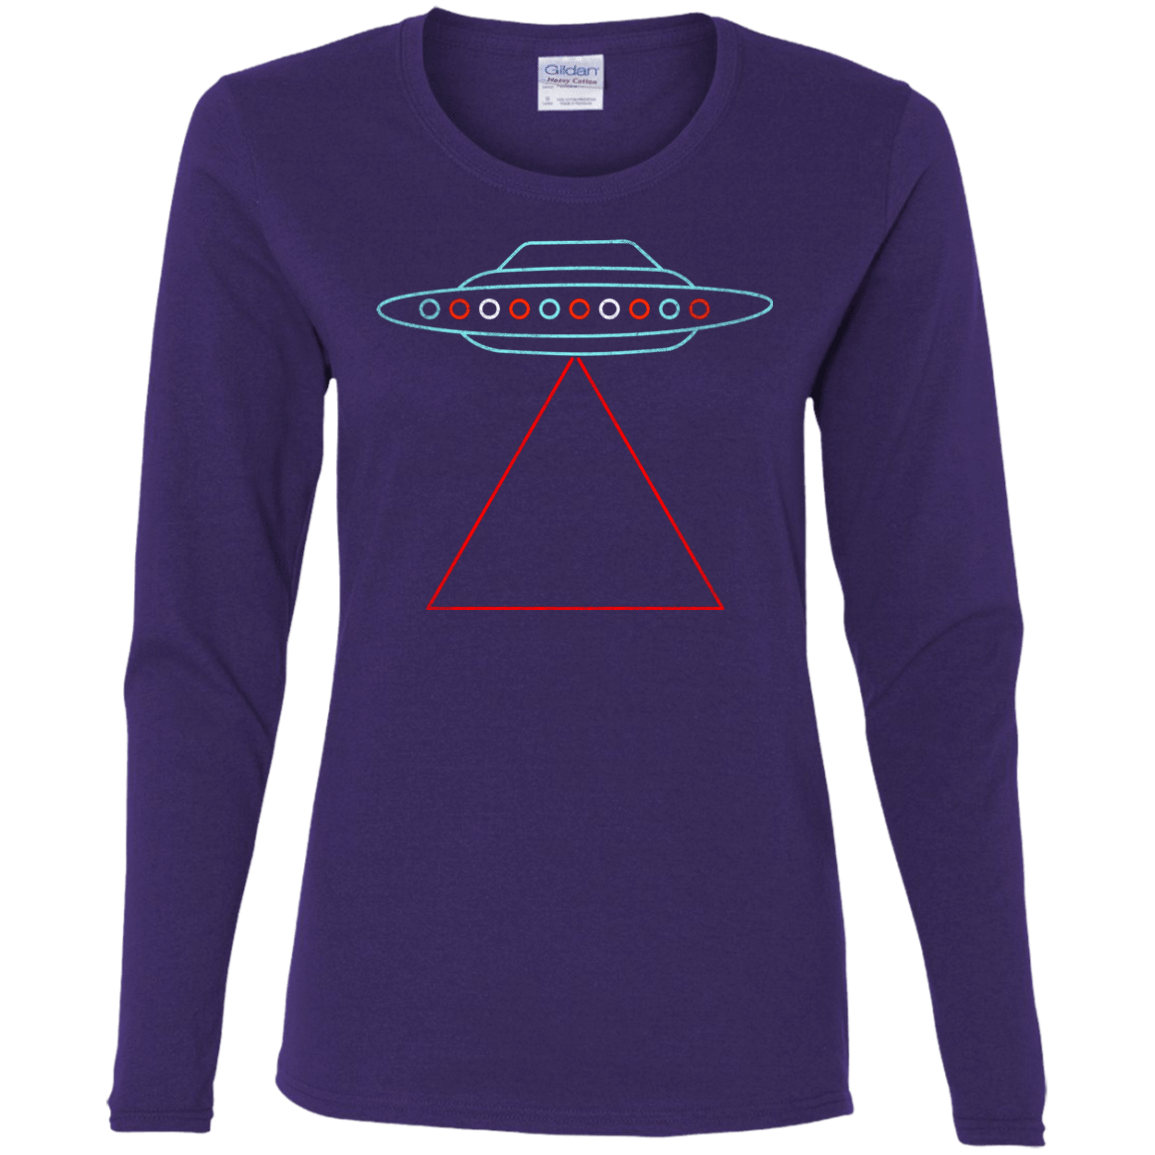 T-Shirts Purple / S UFO Tri Women's Long Sleeve T-Shirt